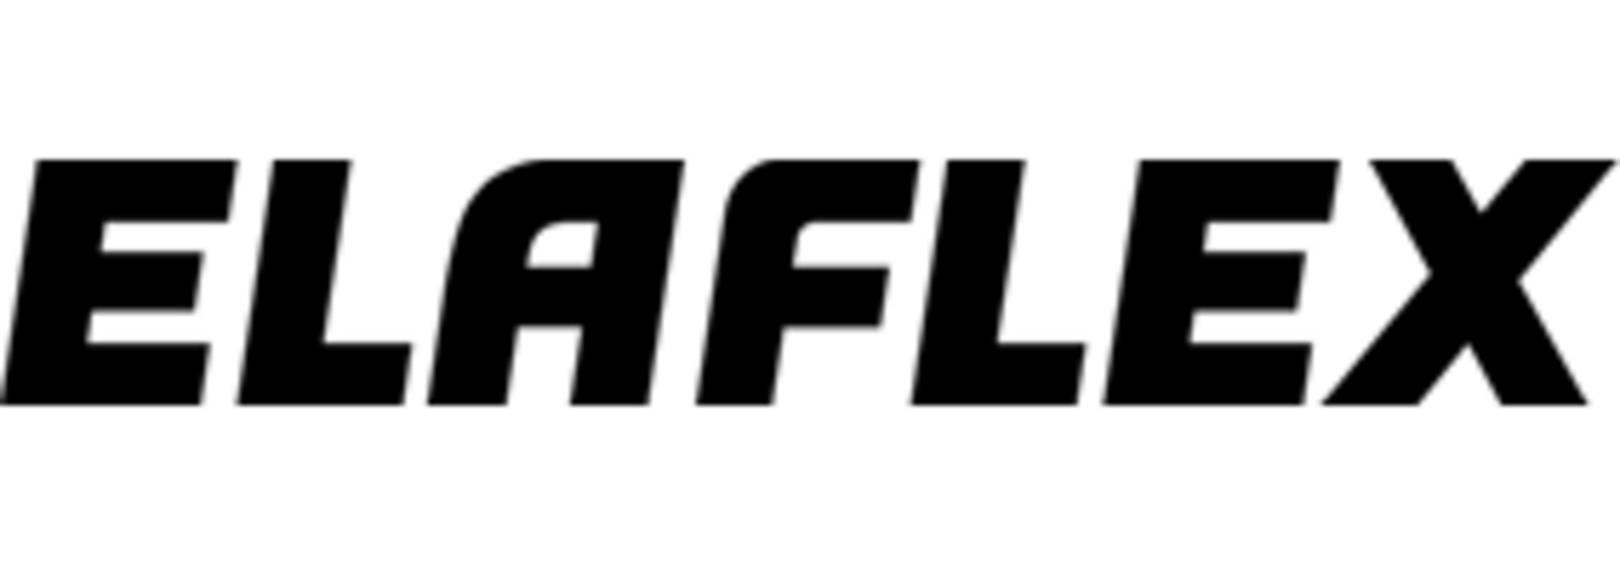 ELAFLEX Company Logo Black